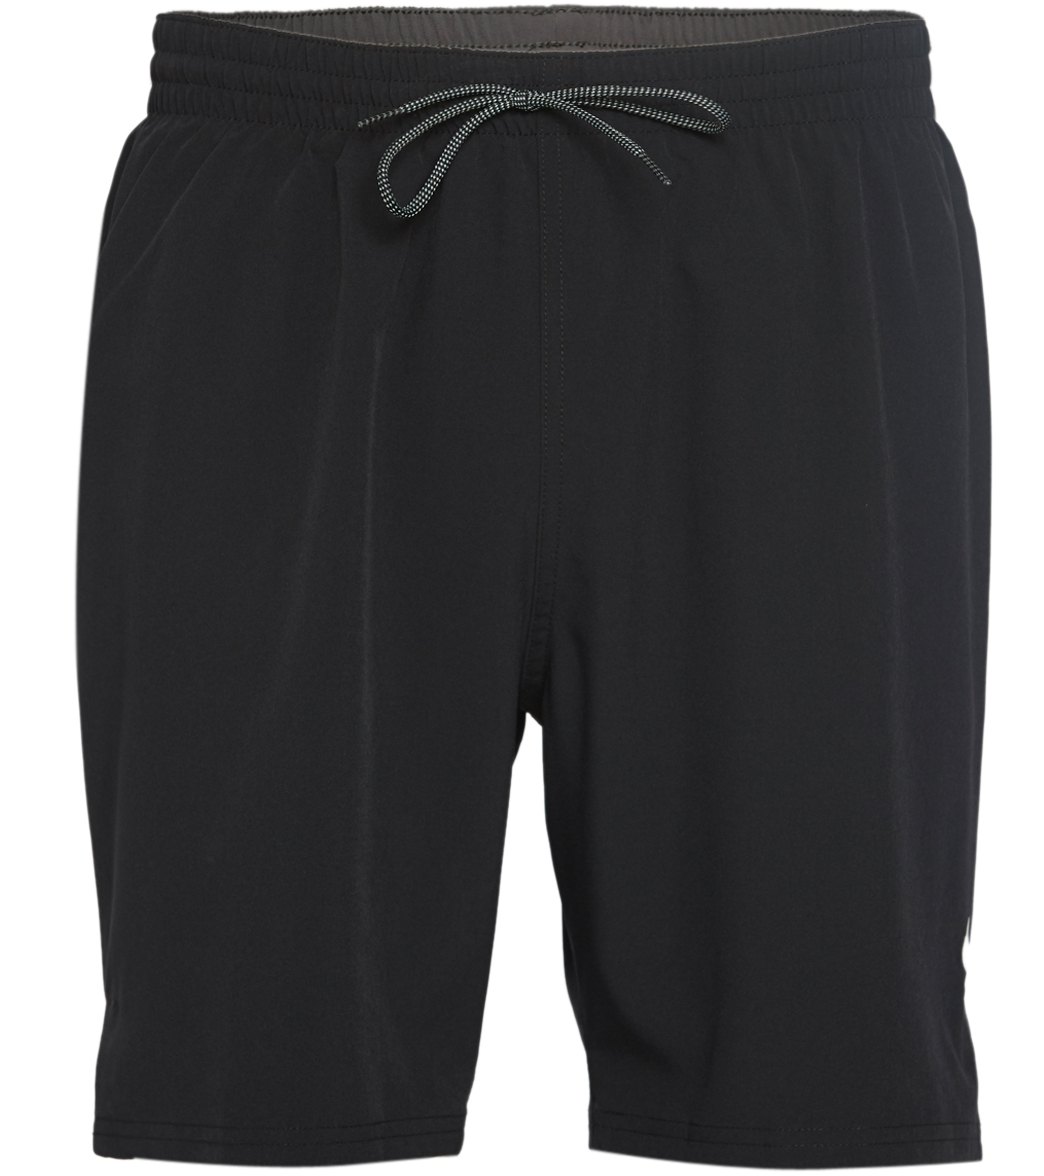 Nike Men's 18 Essential Vital Volley Short - Black Large Polyester - Swimoutlet.com